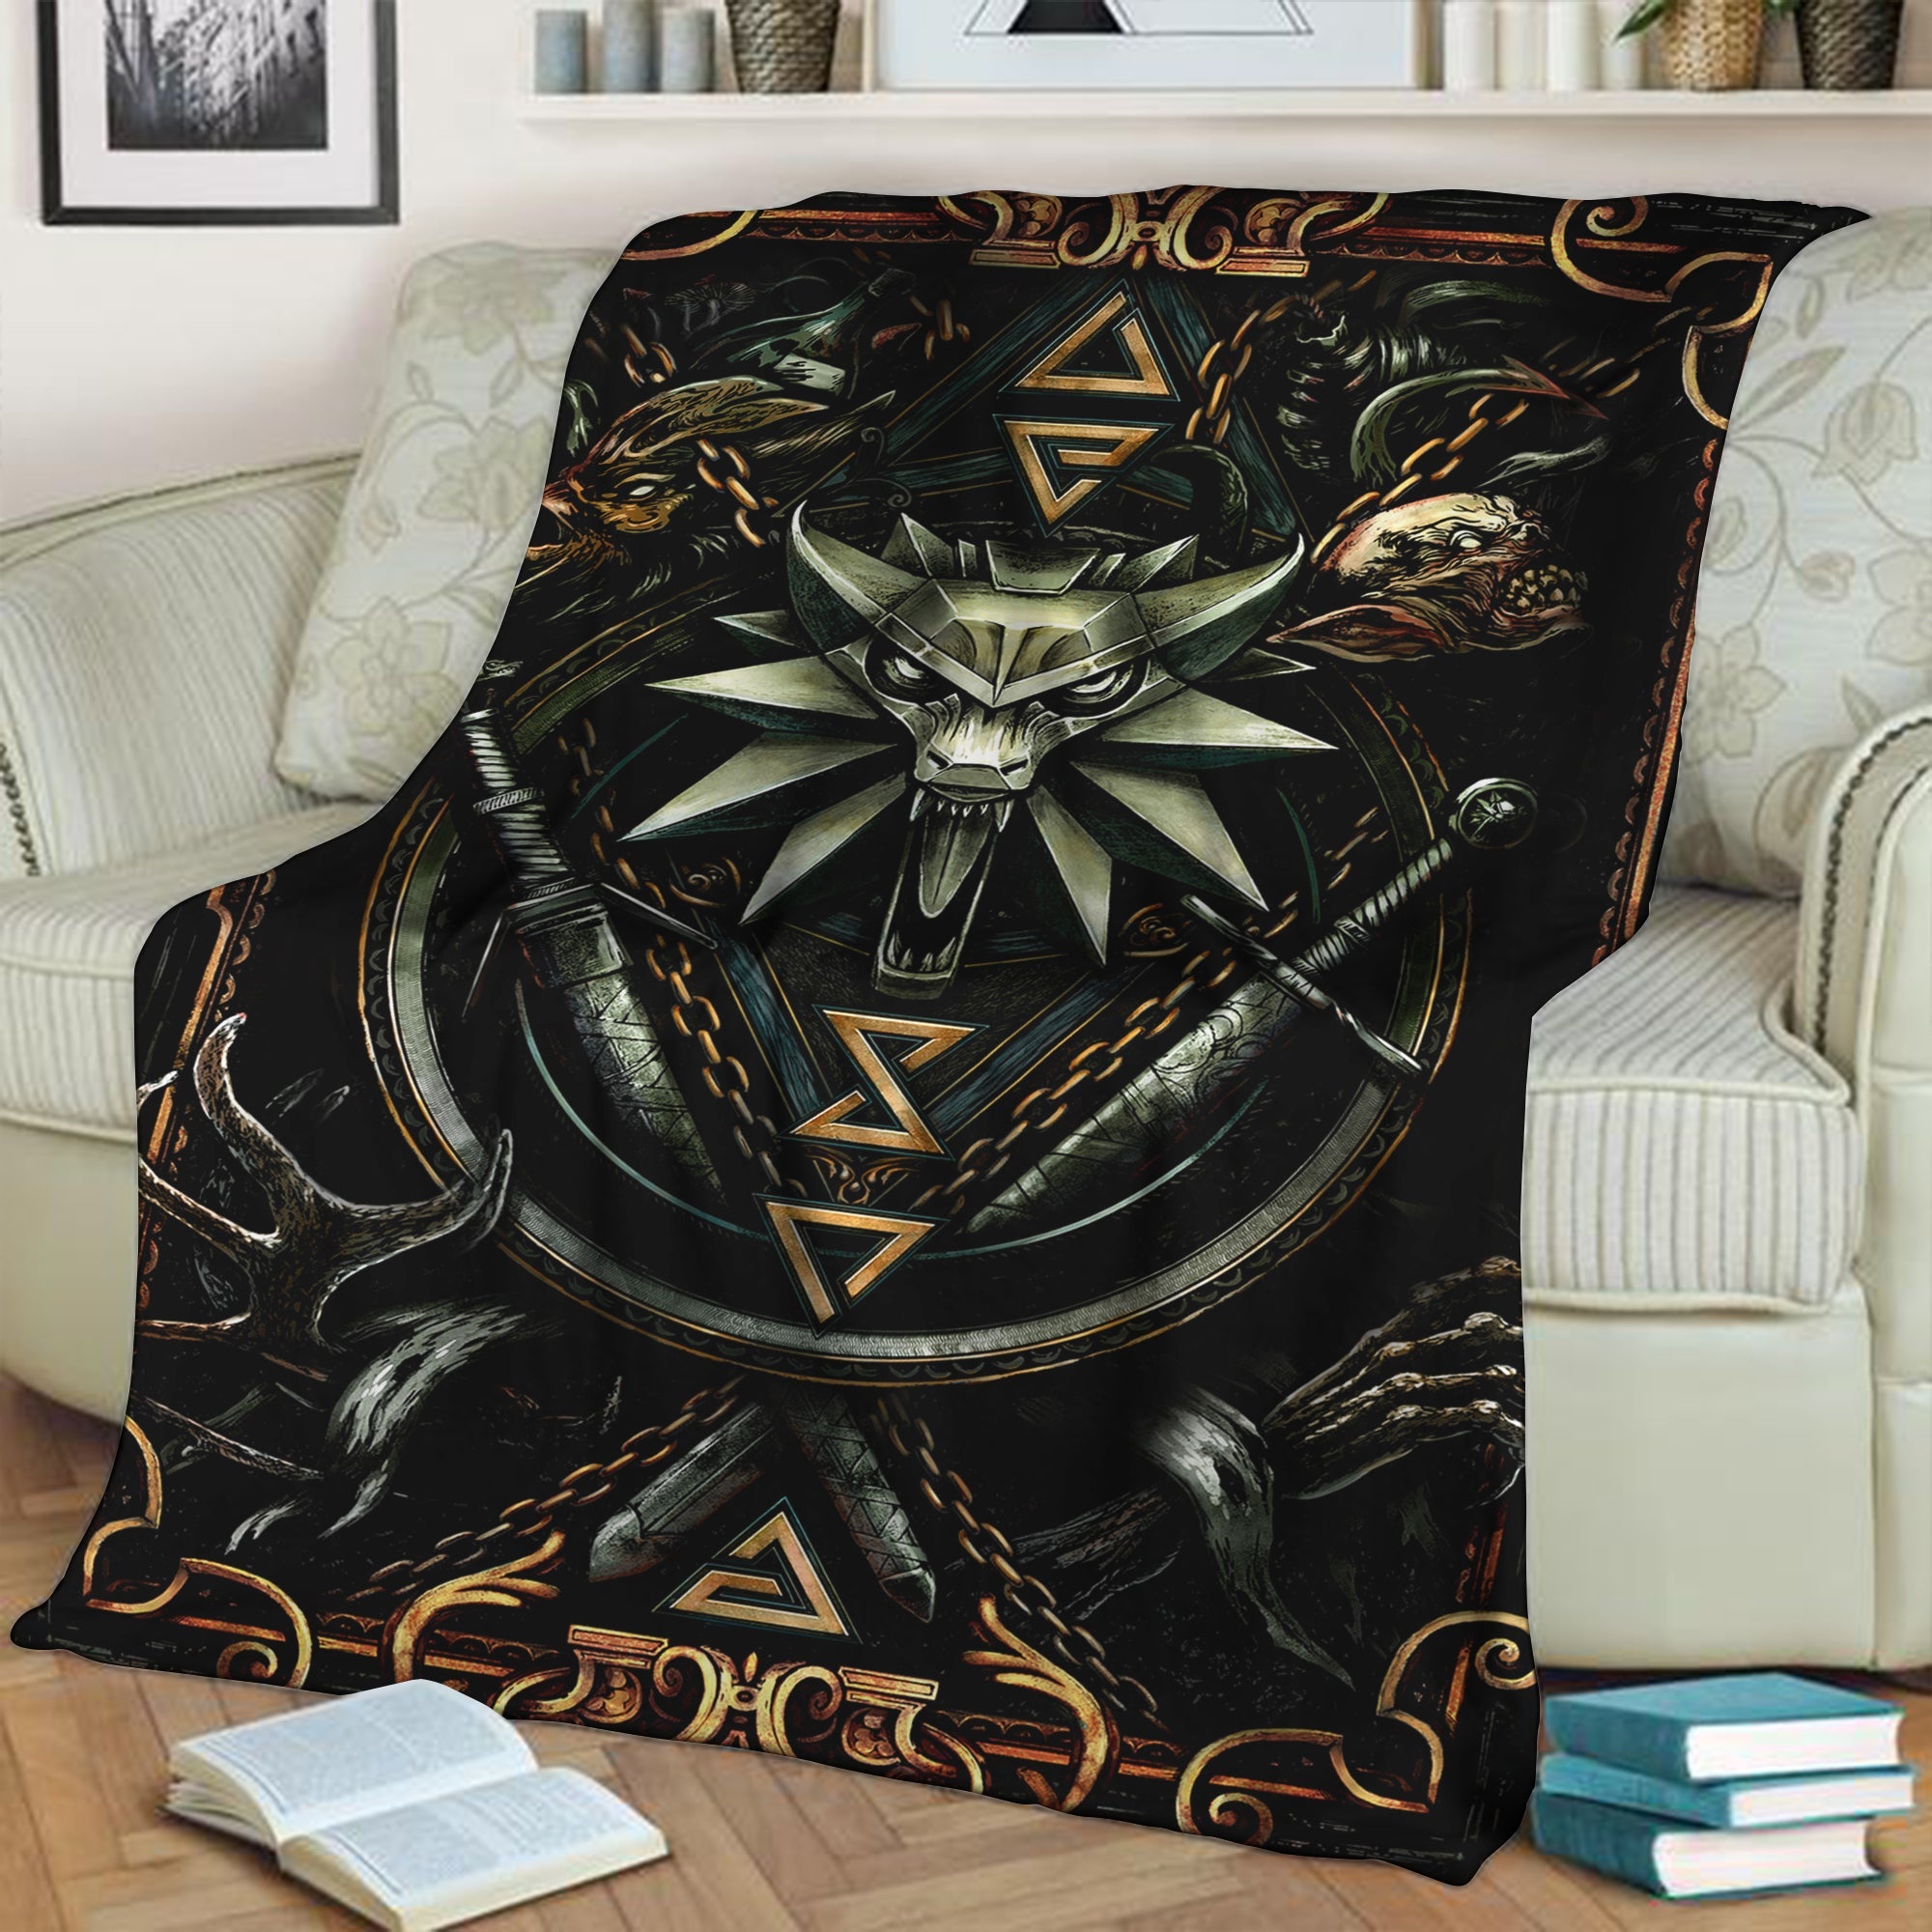 Witcher Symbol 3D Throw Blanket 150cm x 200cm  